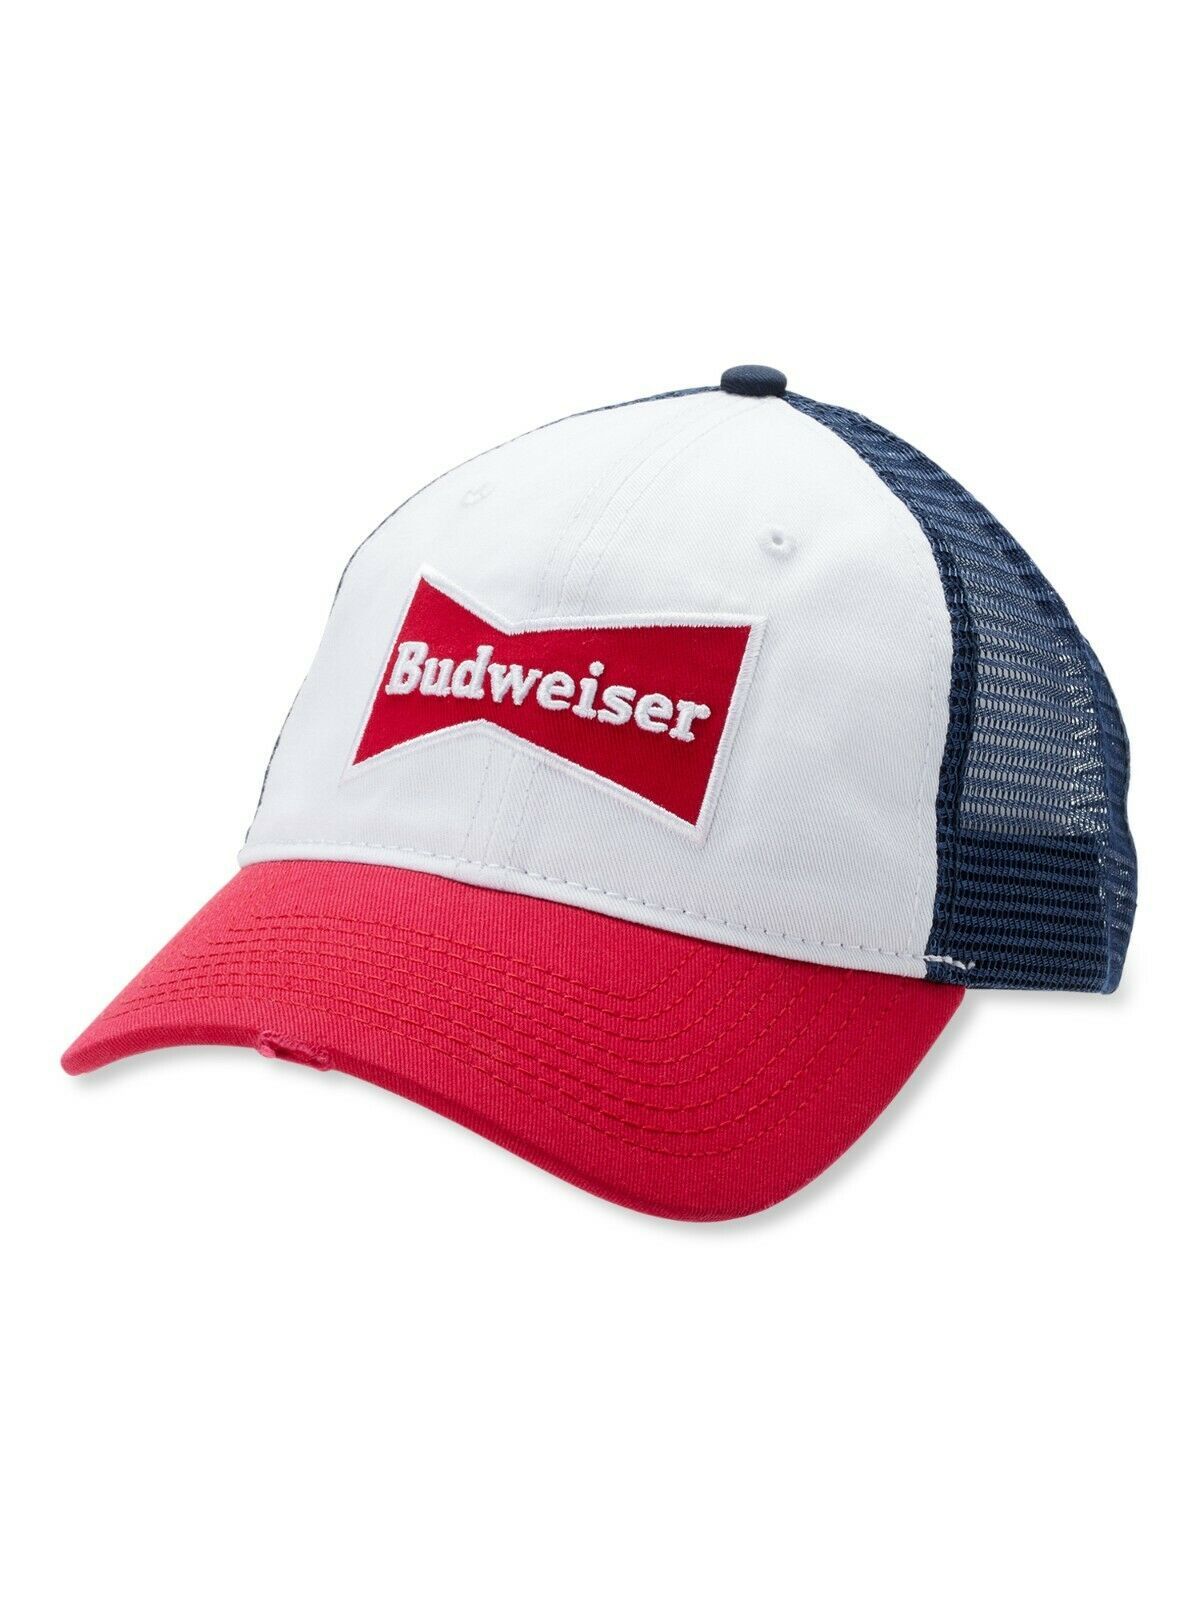 Budweiser Men's King of Beers Baseball Hat (Adjustable Snapback, Red/White/Blue) - $24.70